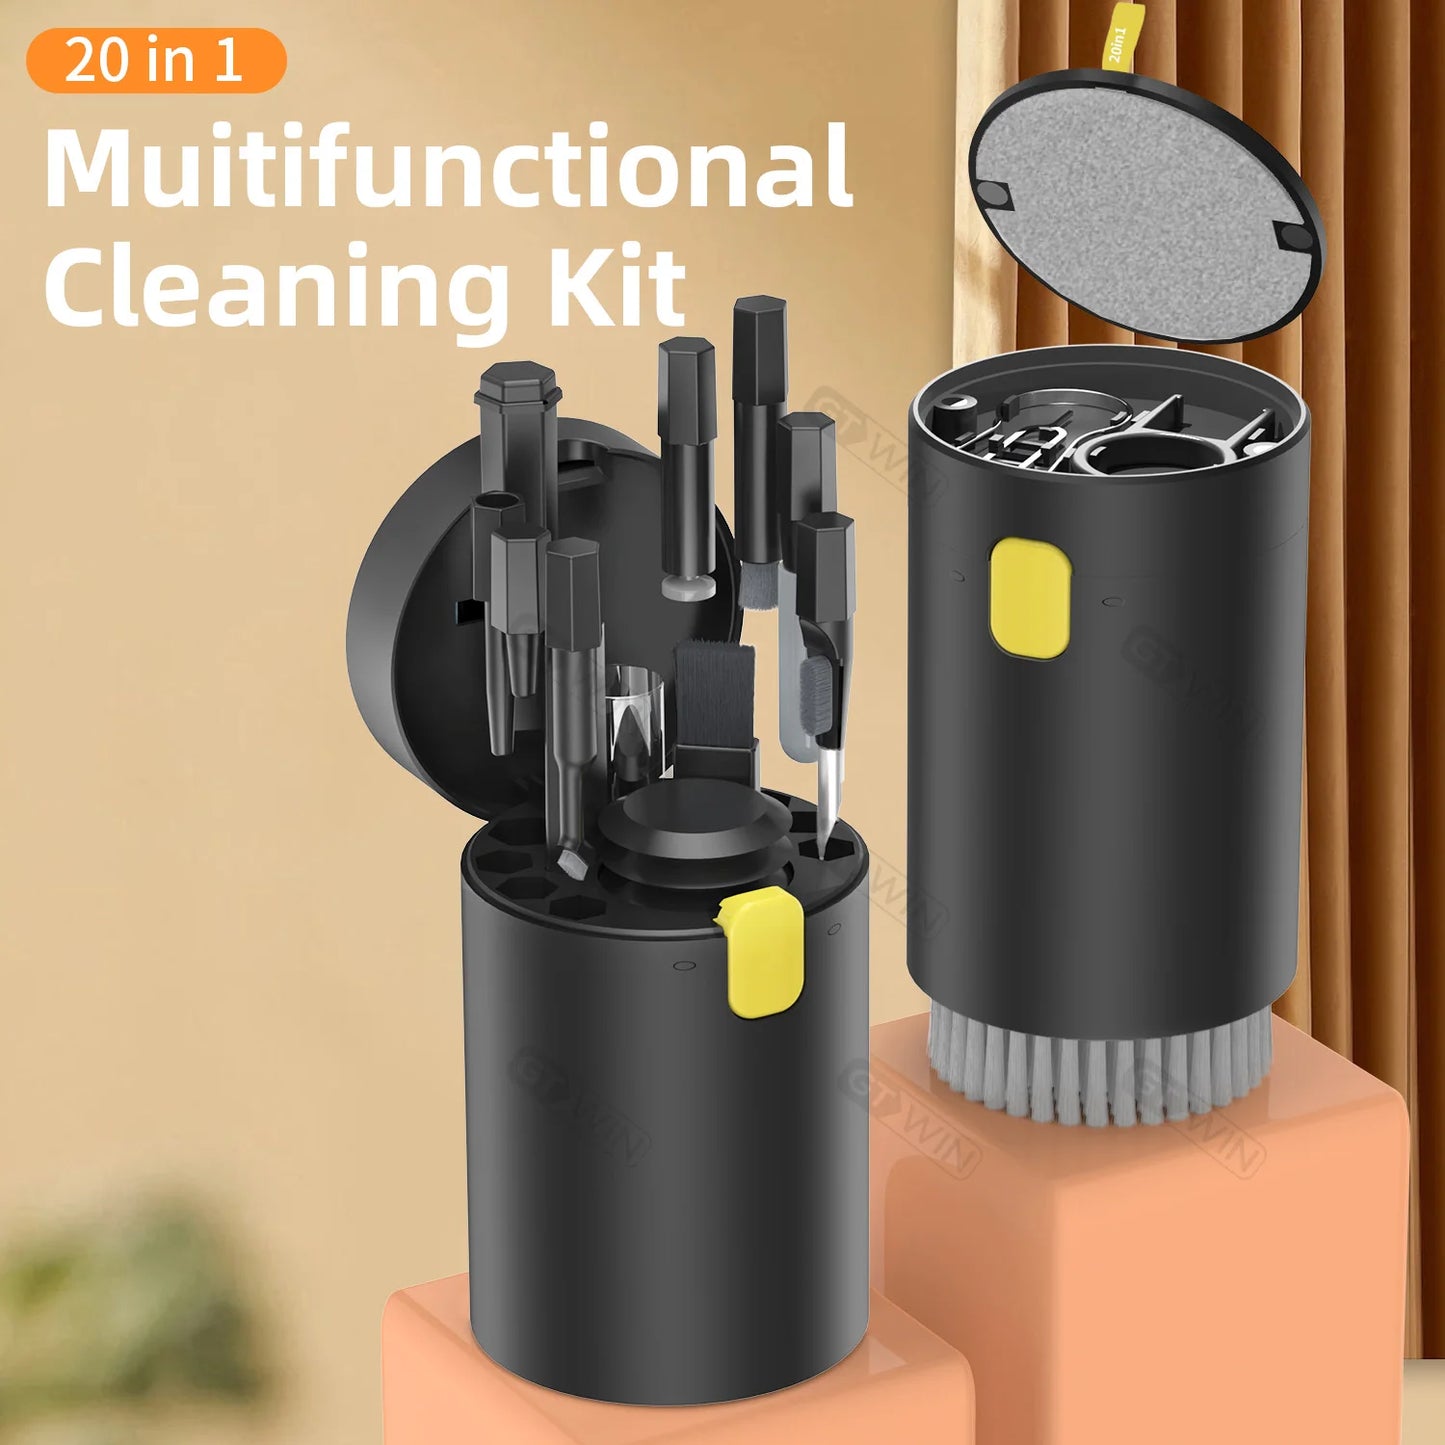 NerdTech Cleaning Kit